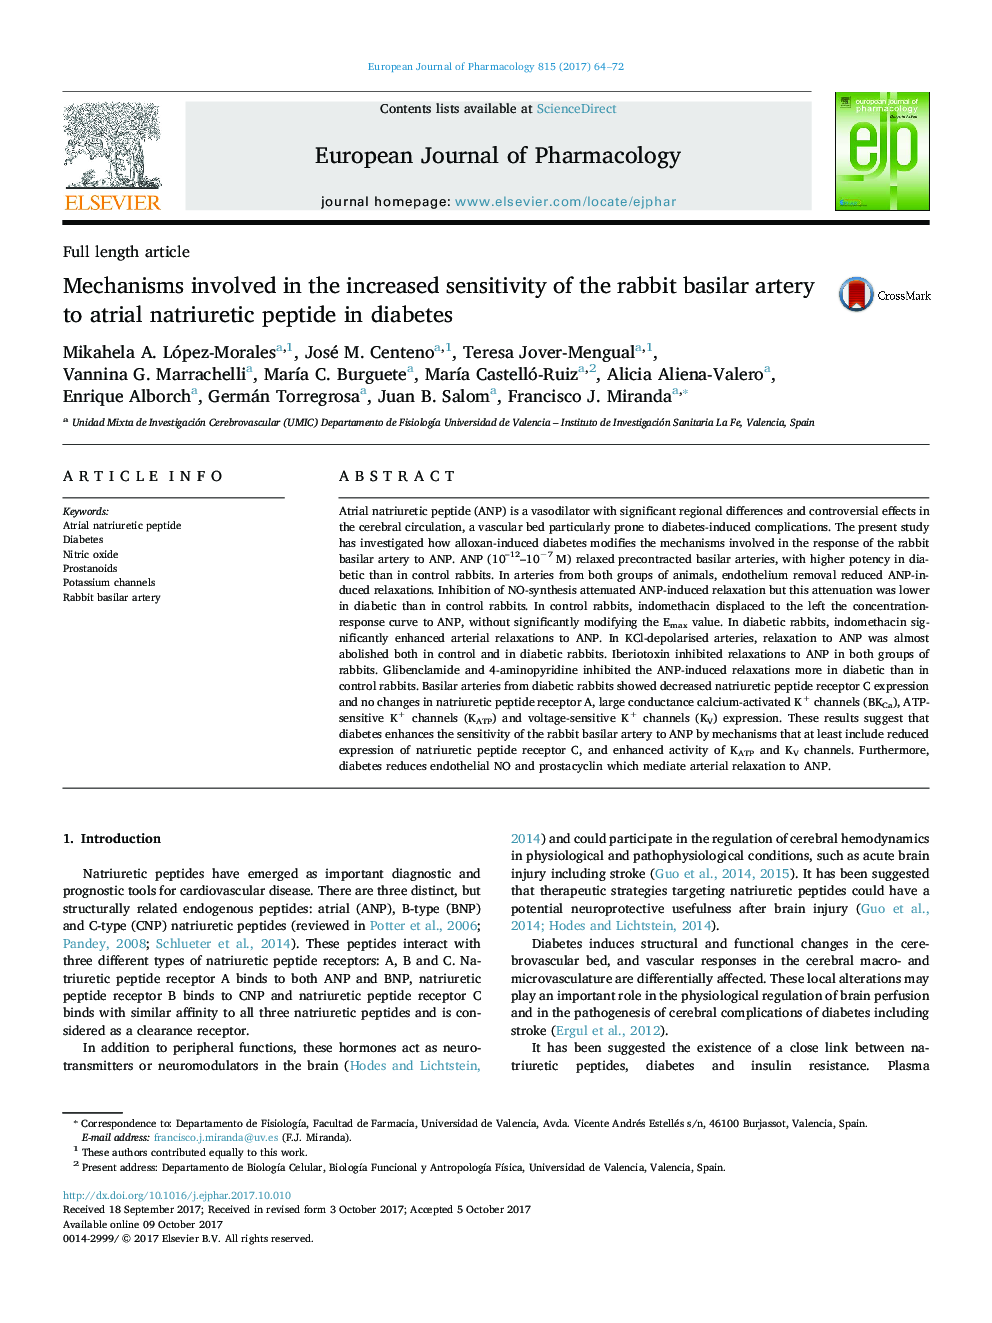 Mechanisms involved in the increased sensitivity of the rabbit basilar artery to atrial natriuretic peptide in diabetes